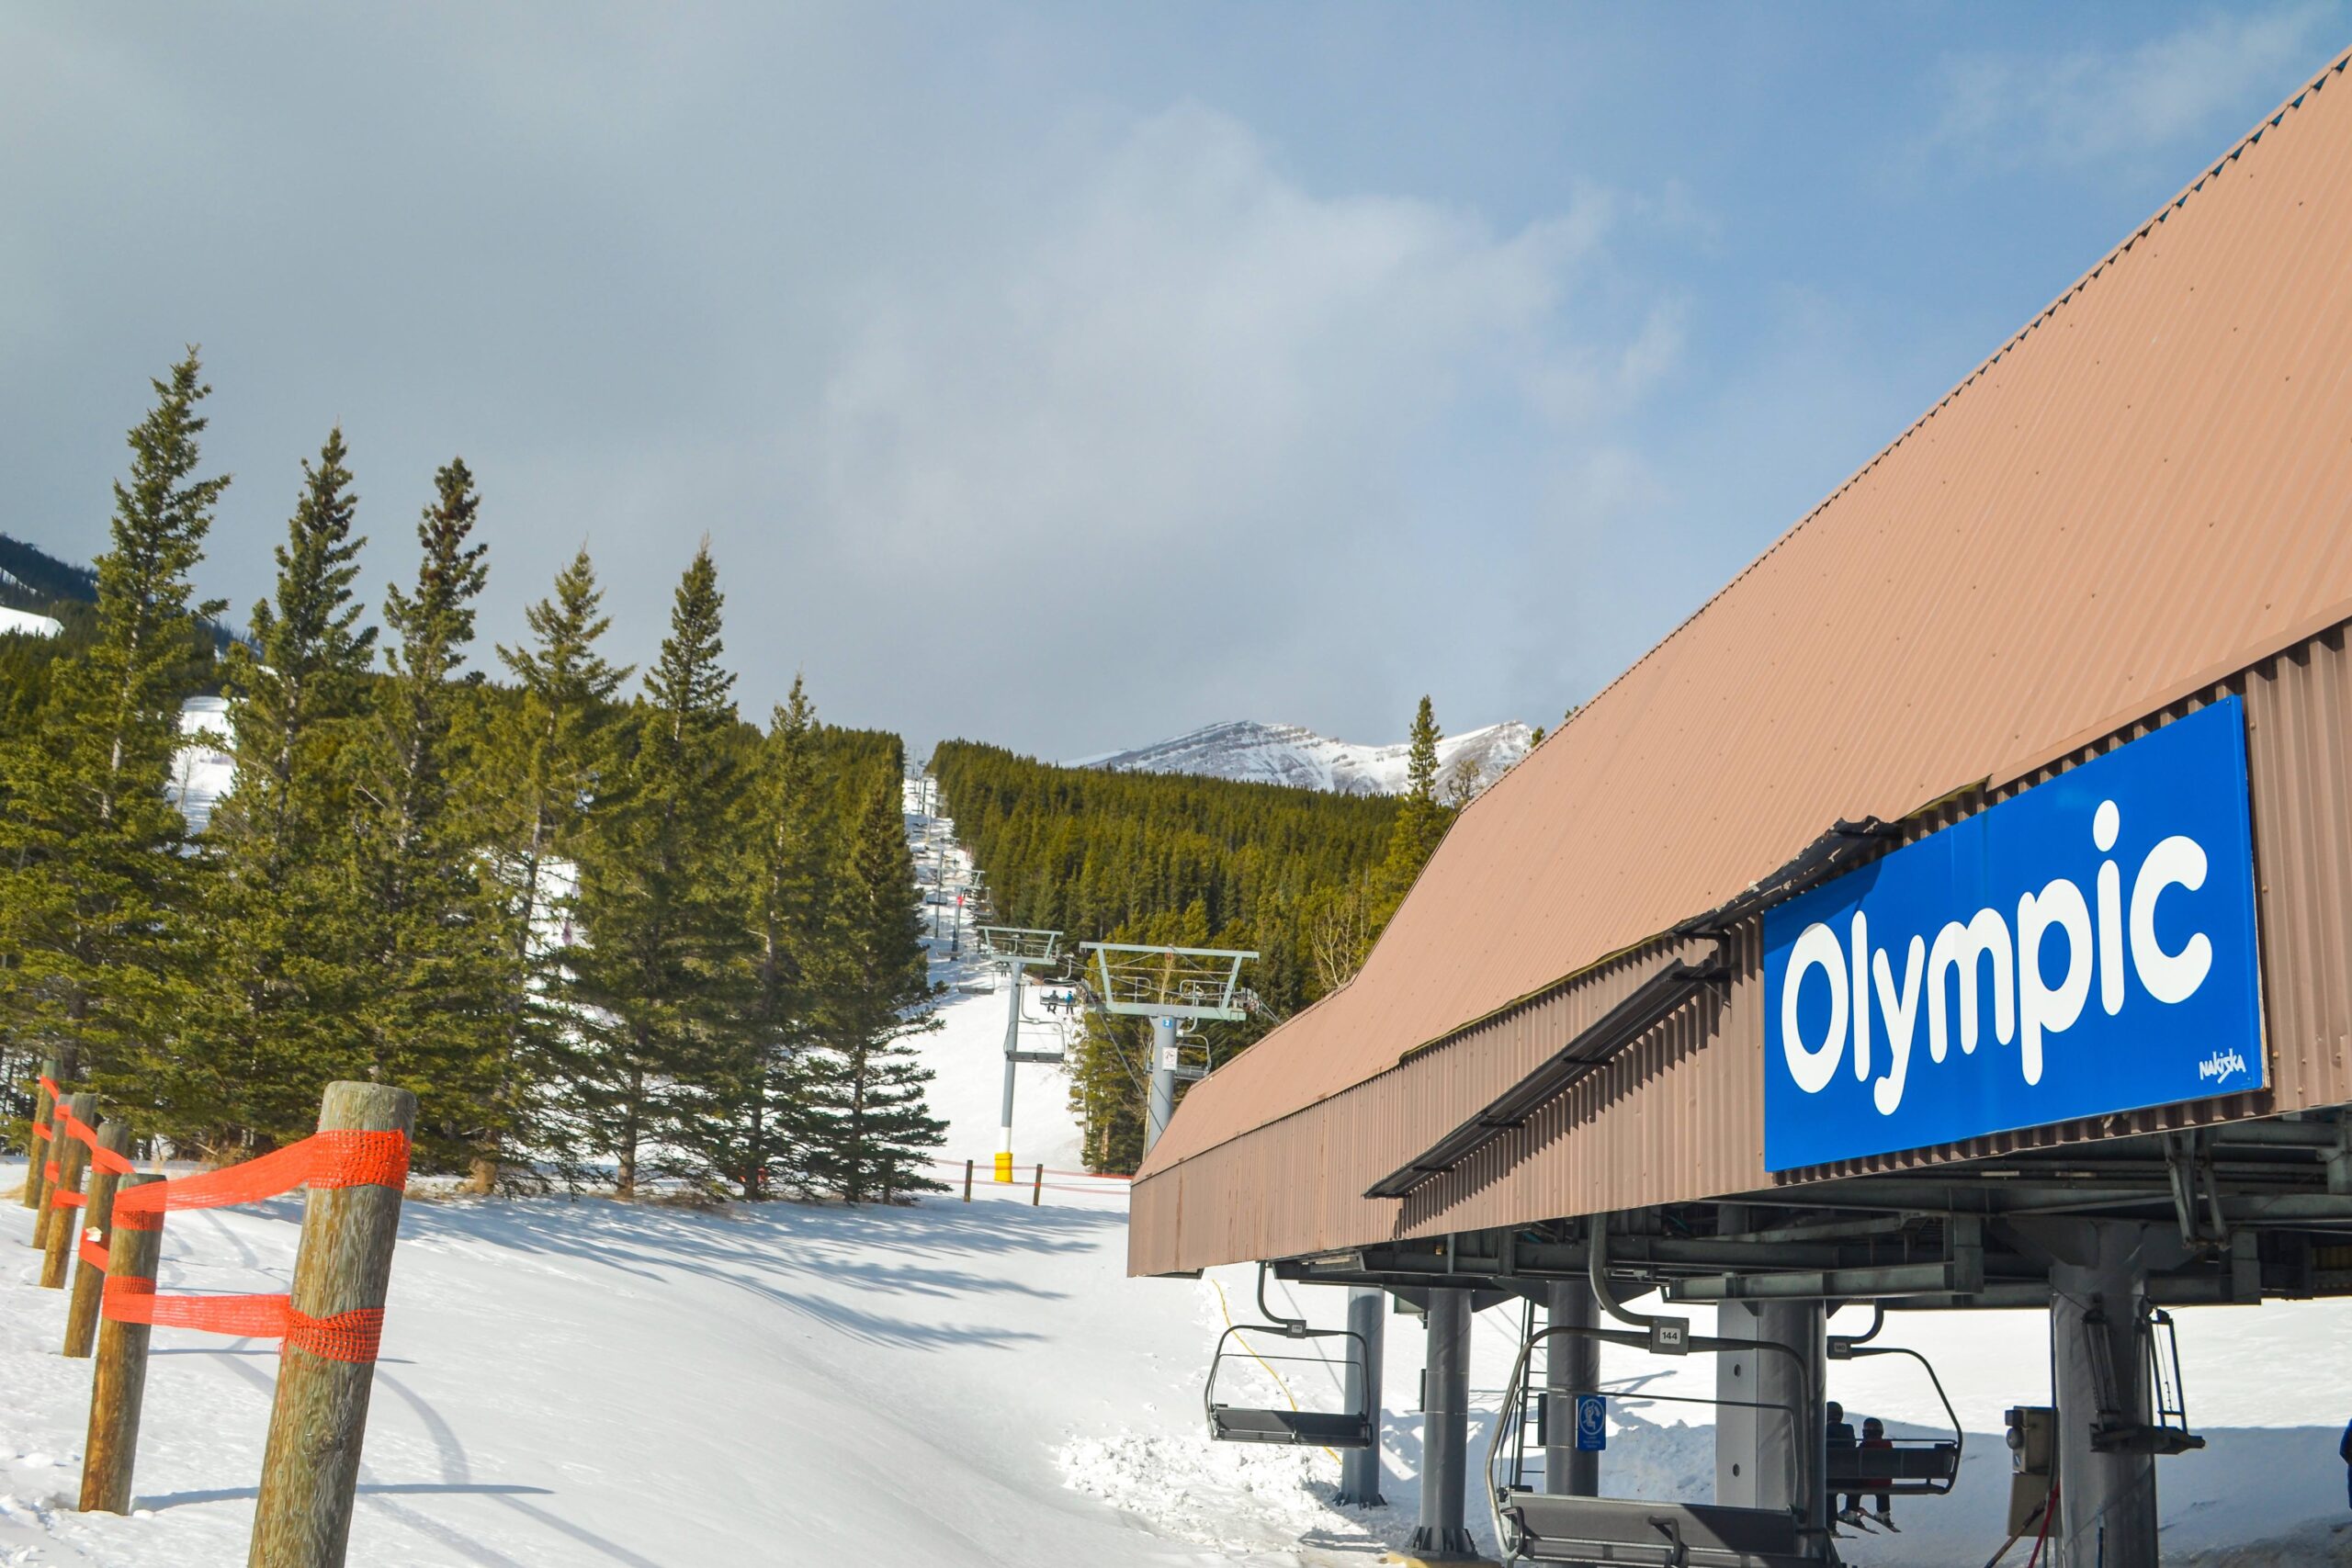 The Olympic Chair at the Nakiska Ski Resort